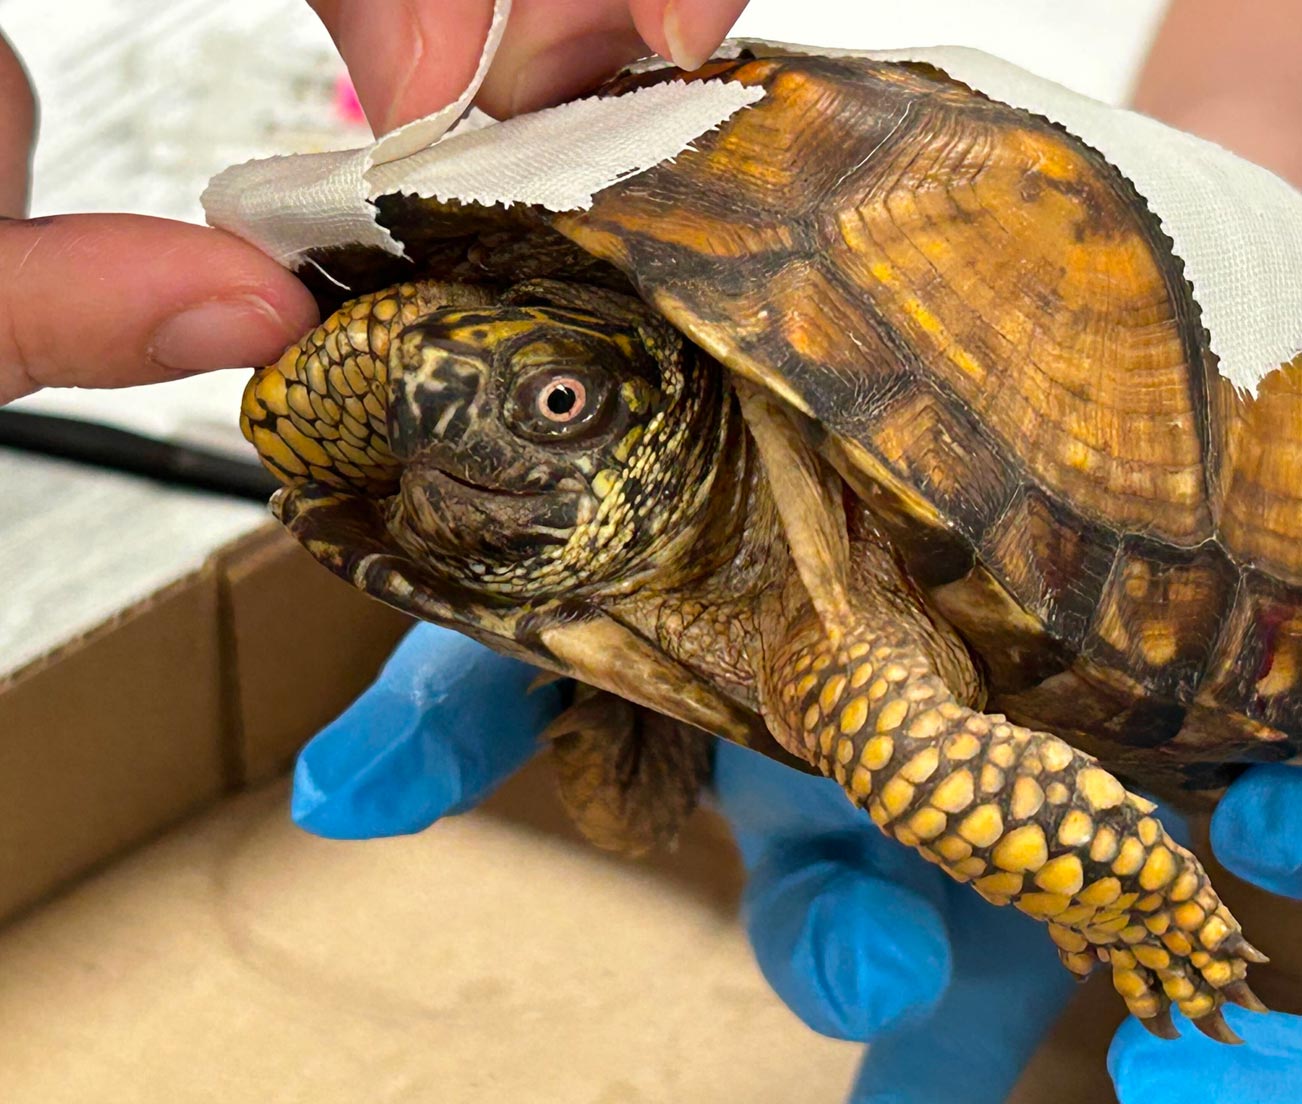 Injured Tortoise Having Shell Bandaged